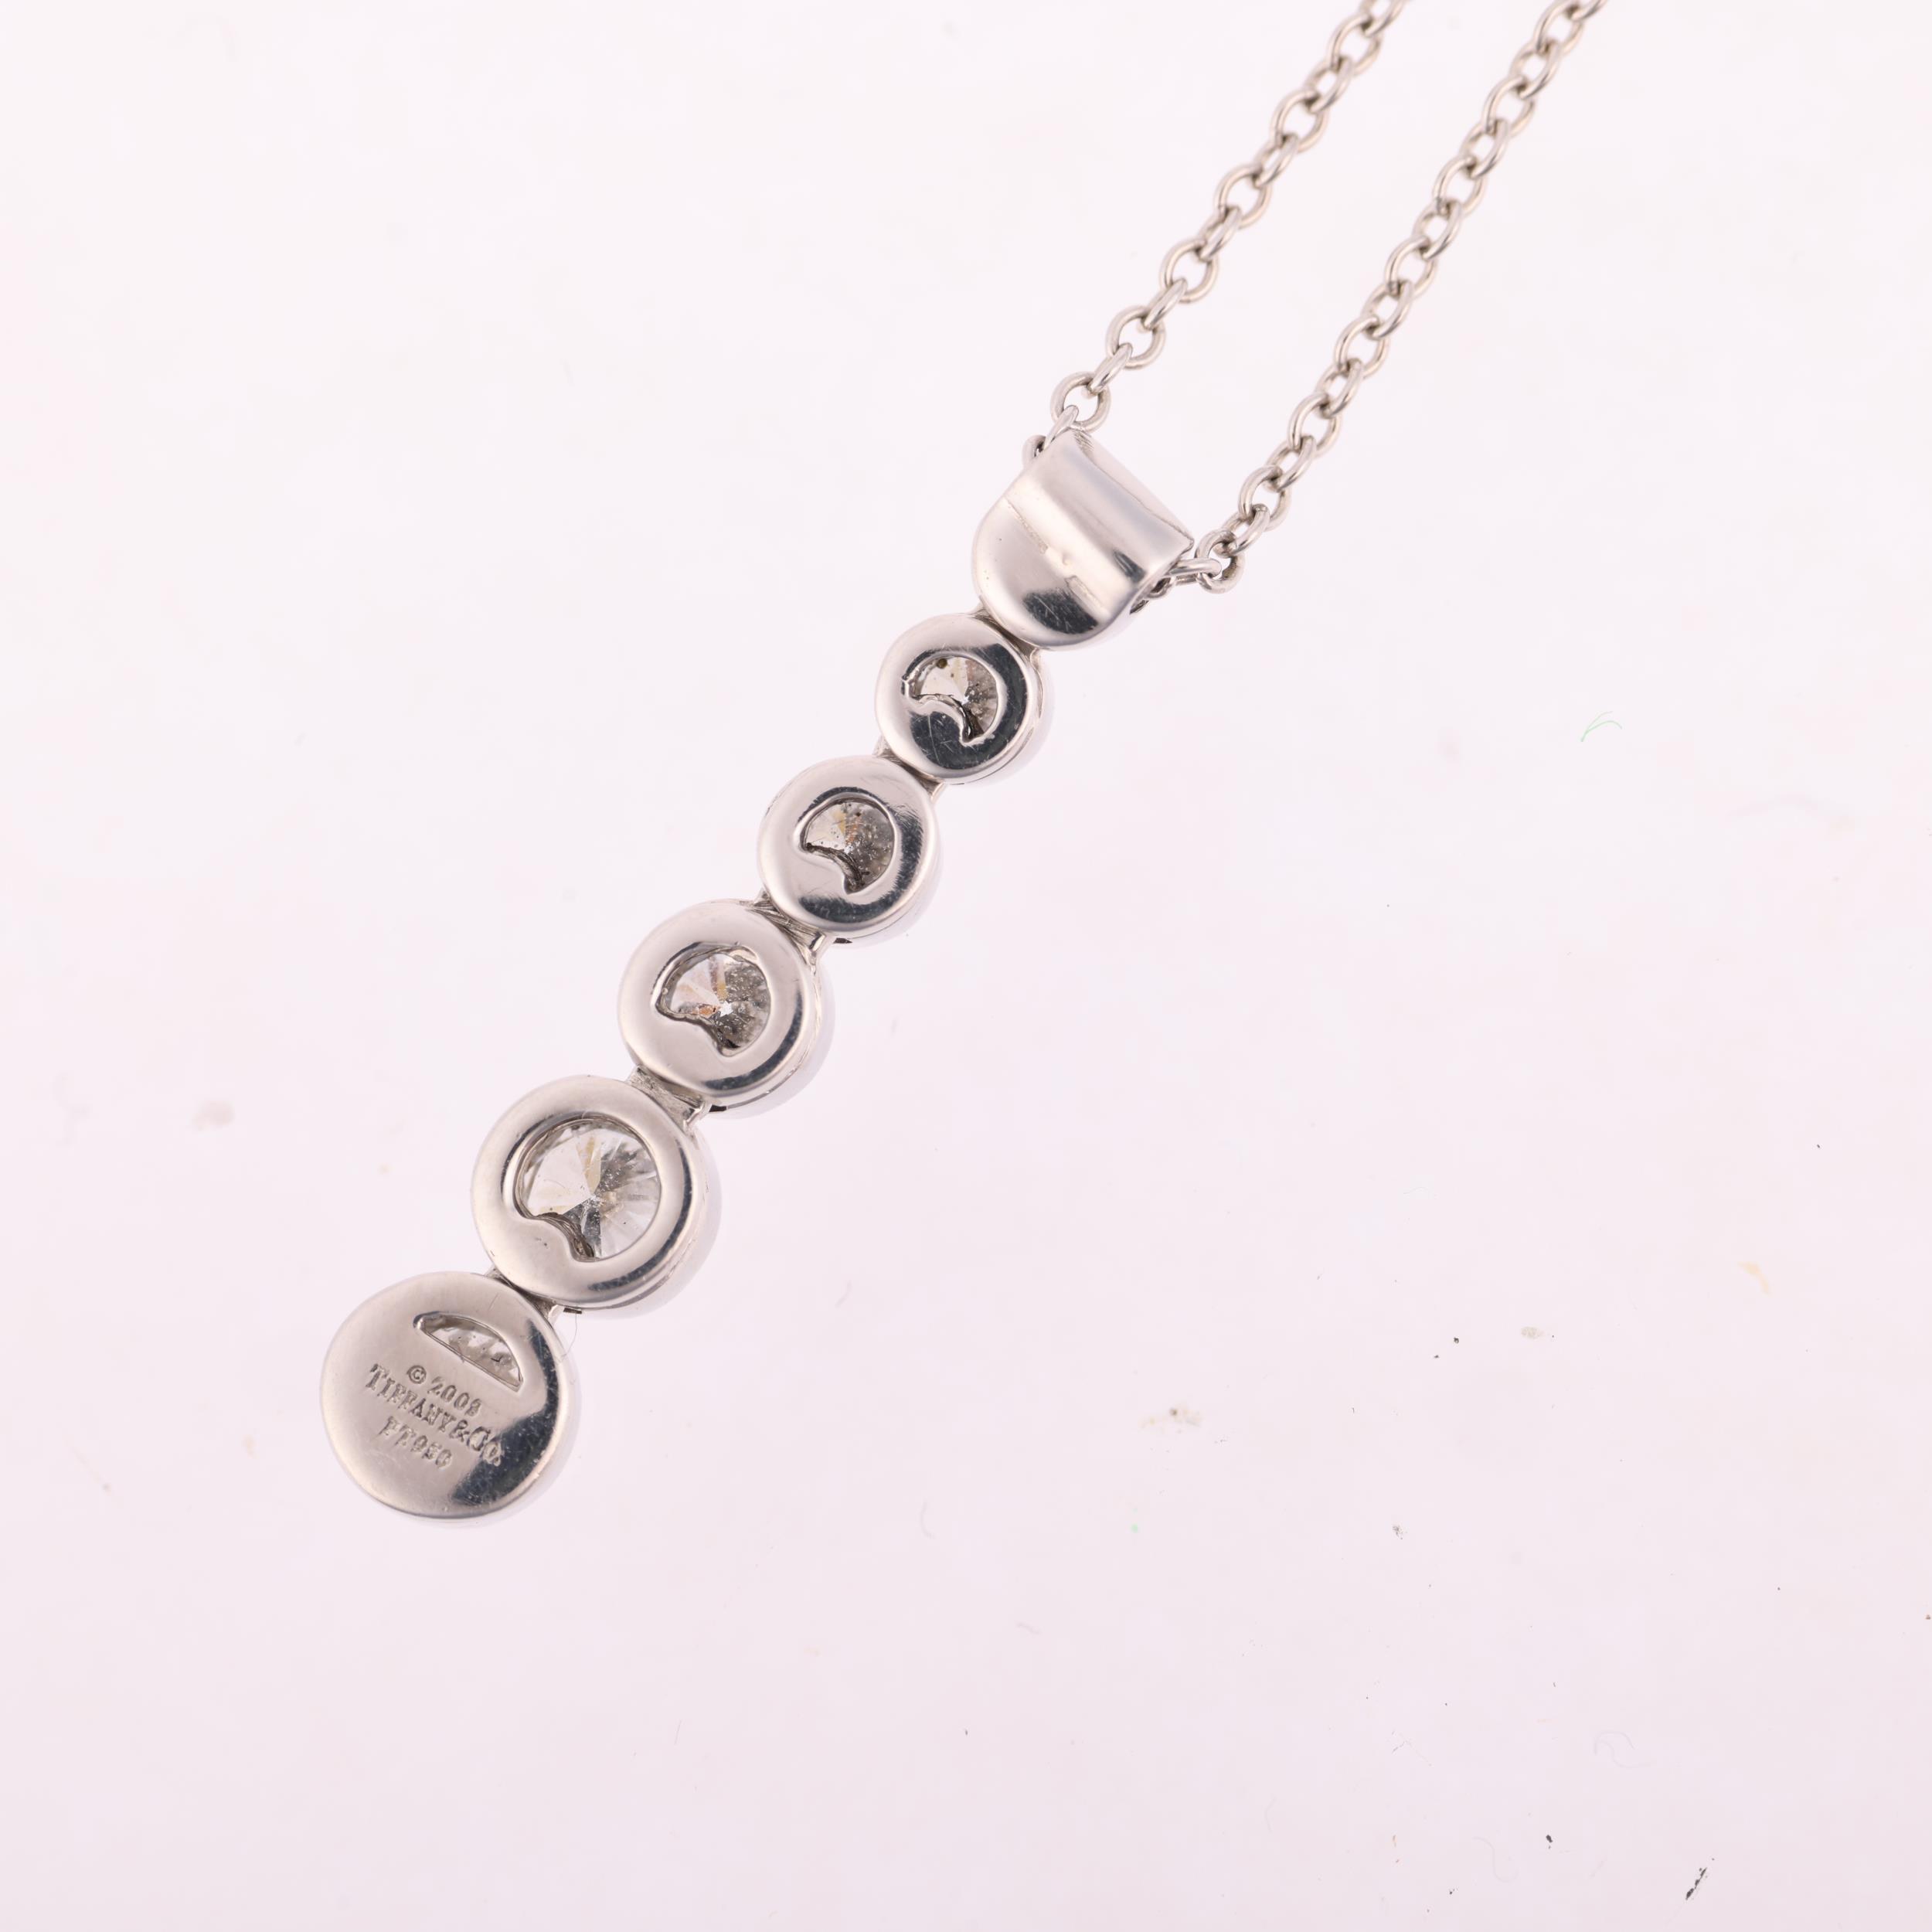 TIFFANY & CO - a platinum diamond Jazz pendant necklace, circa 2003, set with graduated modern round - Image 4 of 4